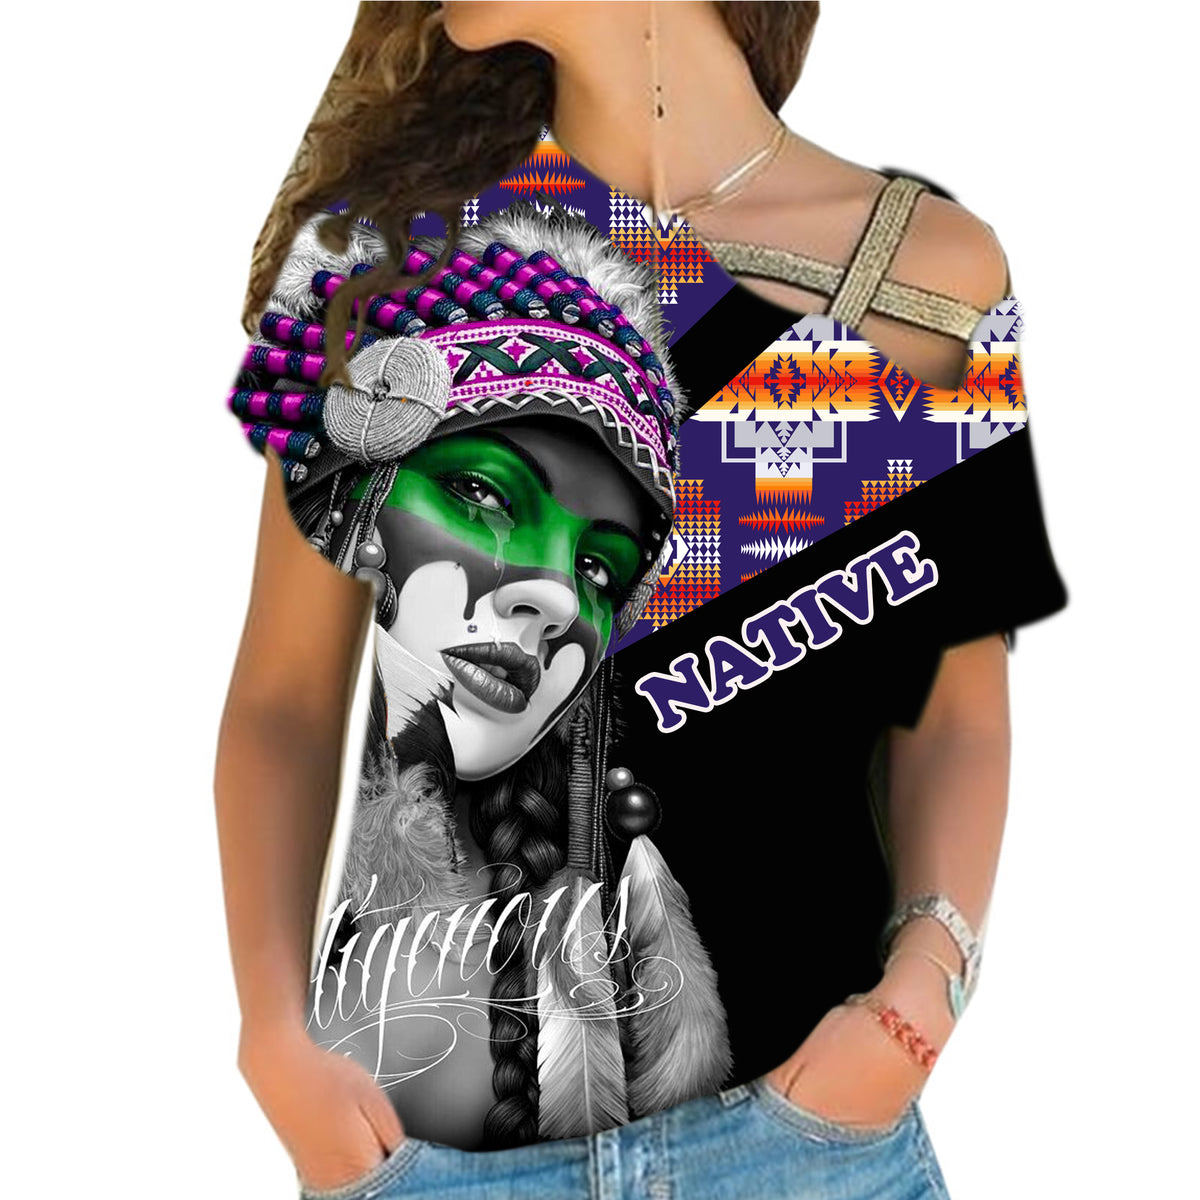 Powwow StoreCRS0001238 Native American Cross Shoulder Shirt